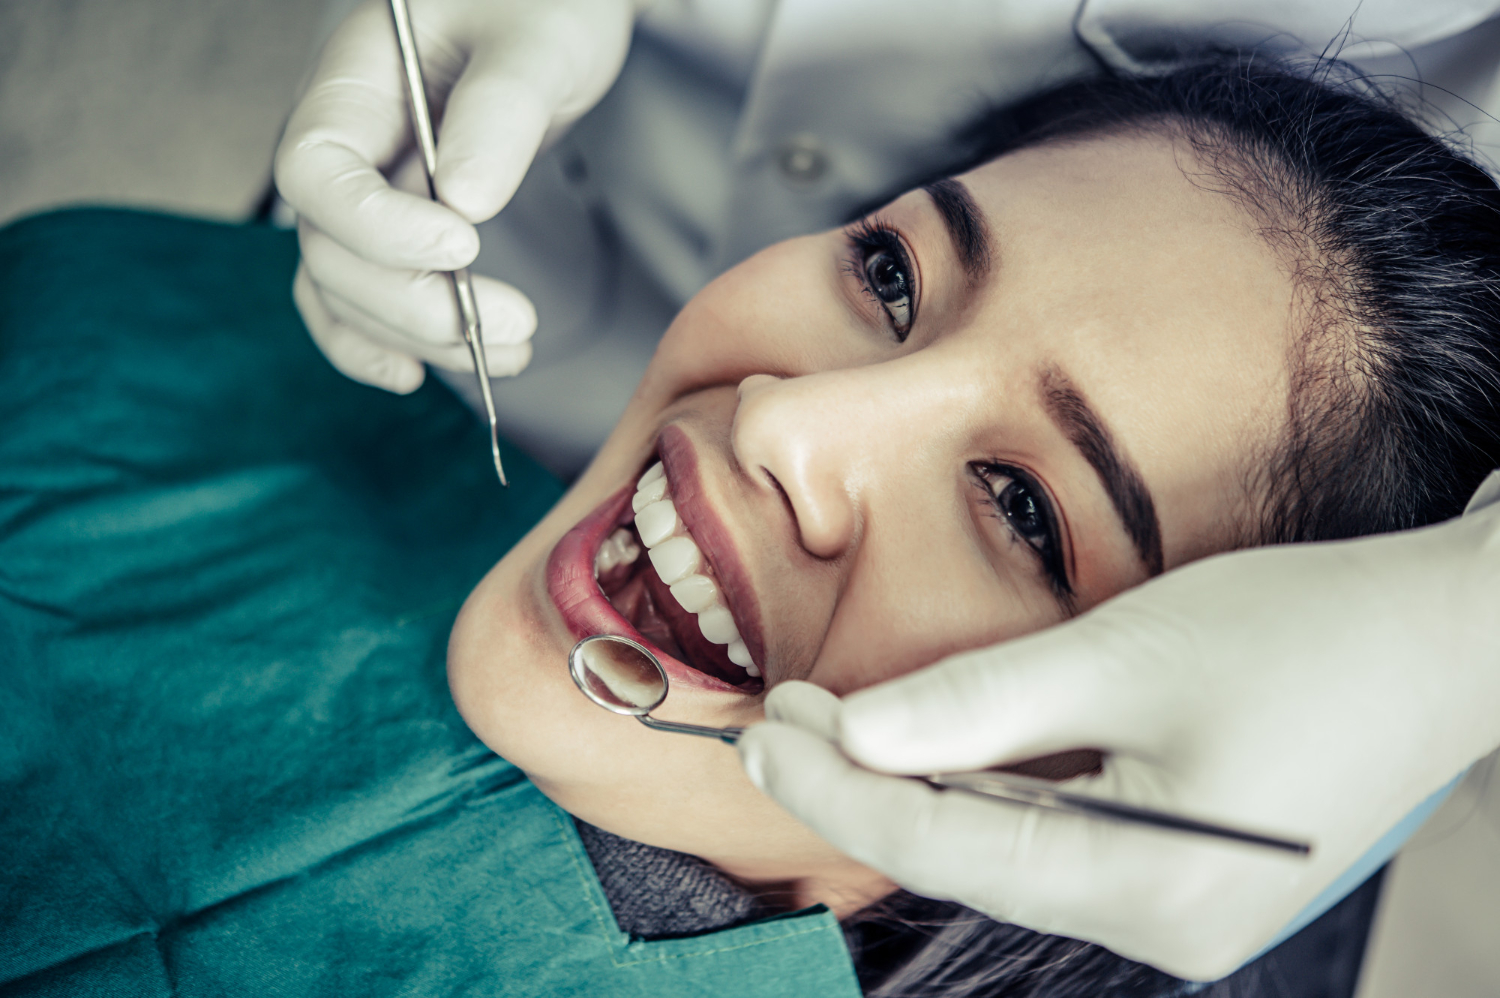 dentists-treat-patients-teeth